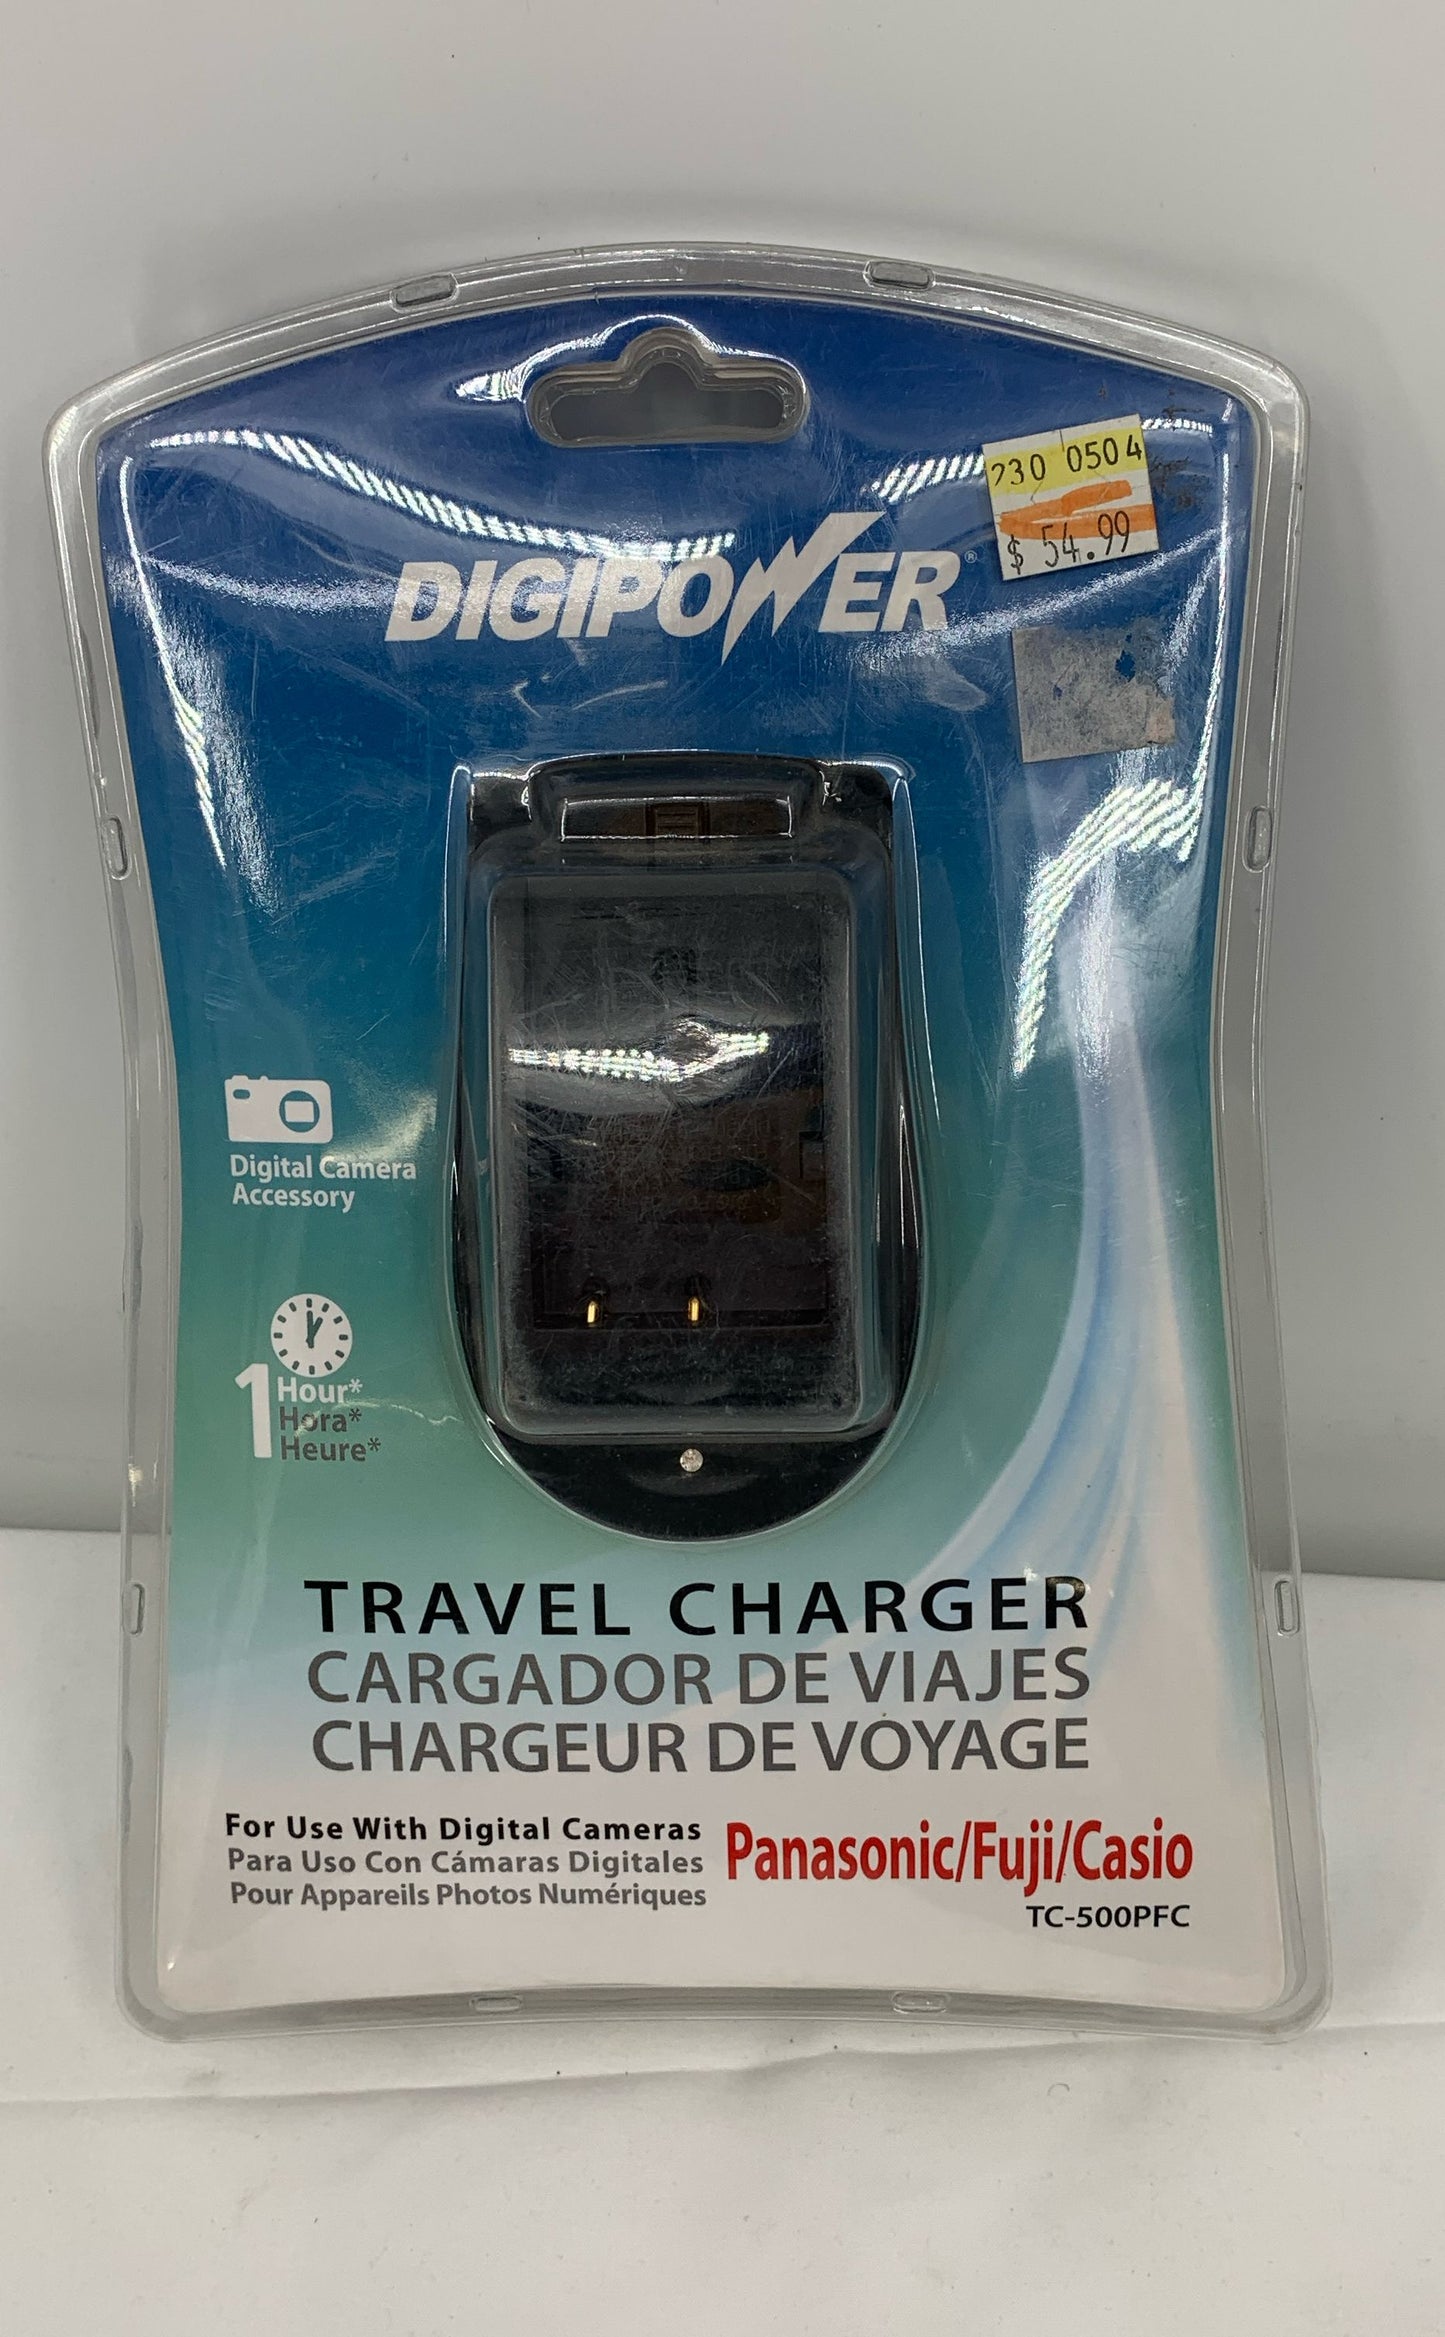 Digipower Travel Charger For Digital Cameras Panasonic/Fuji/Casio TC500PFC New